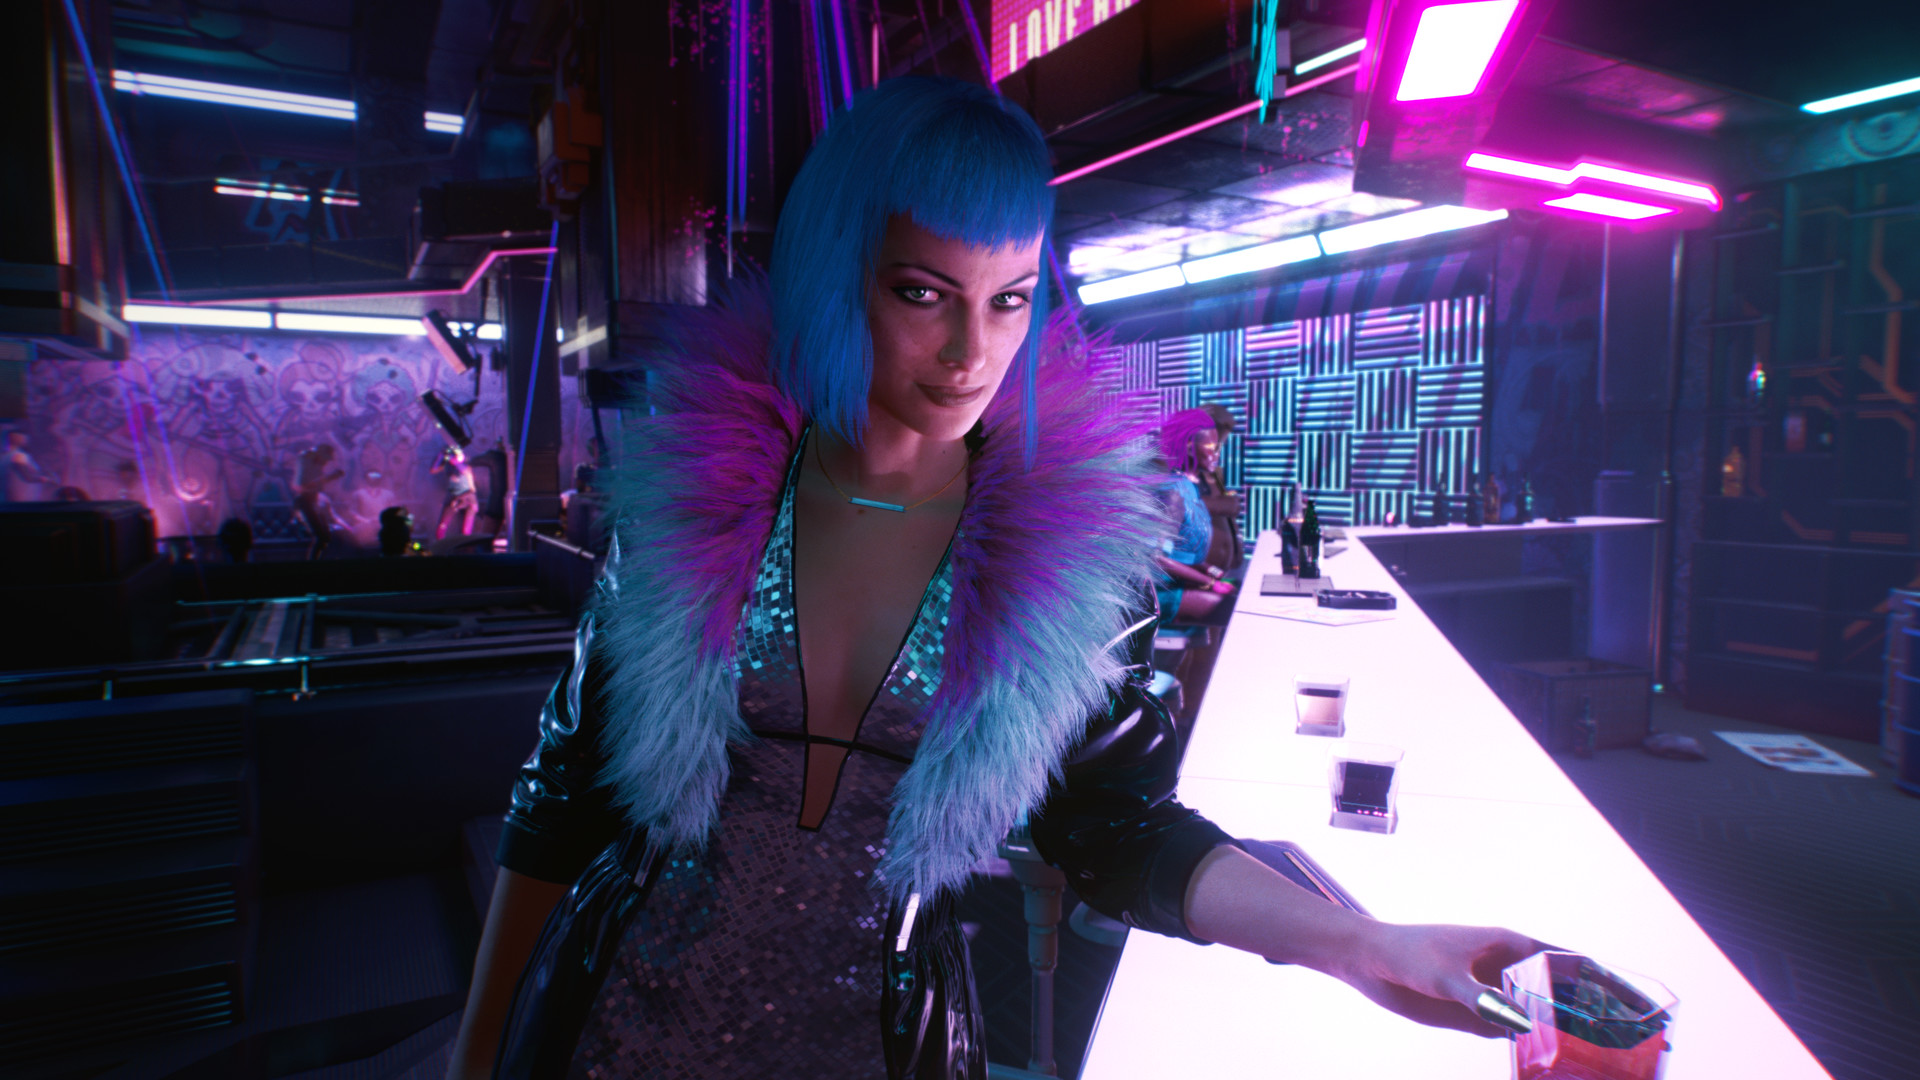 Cyberpunk 2077 + Подарок скриншот